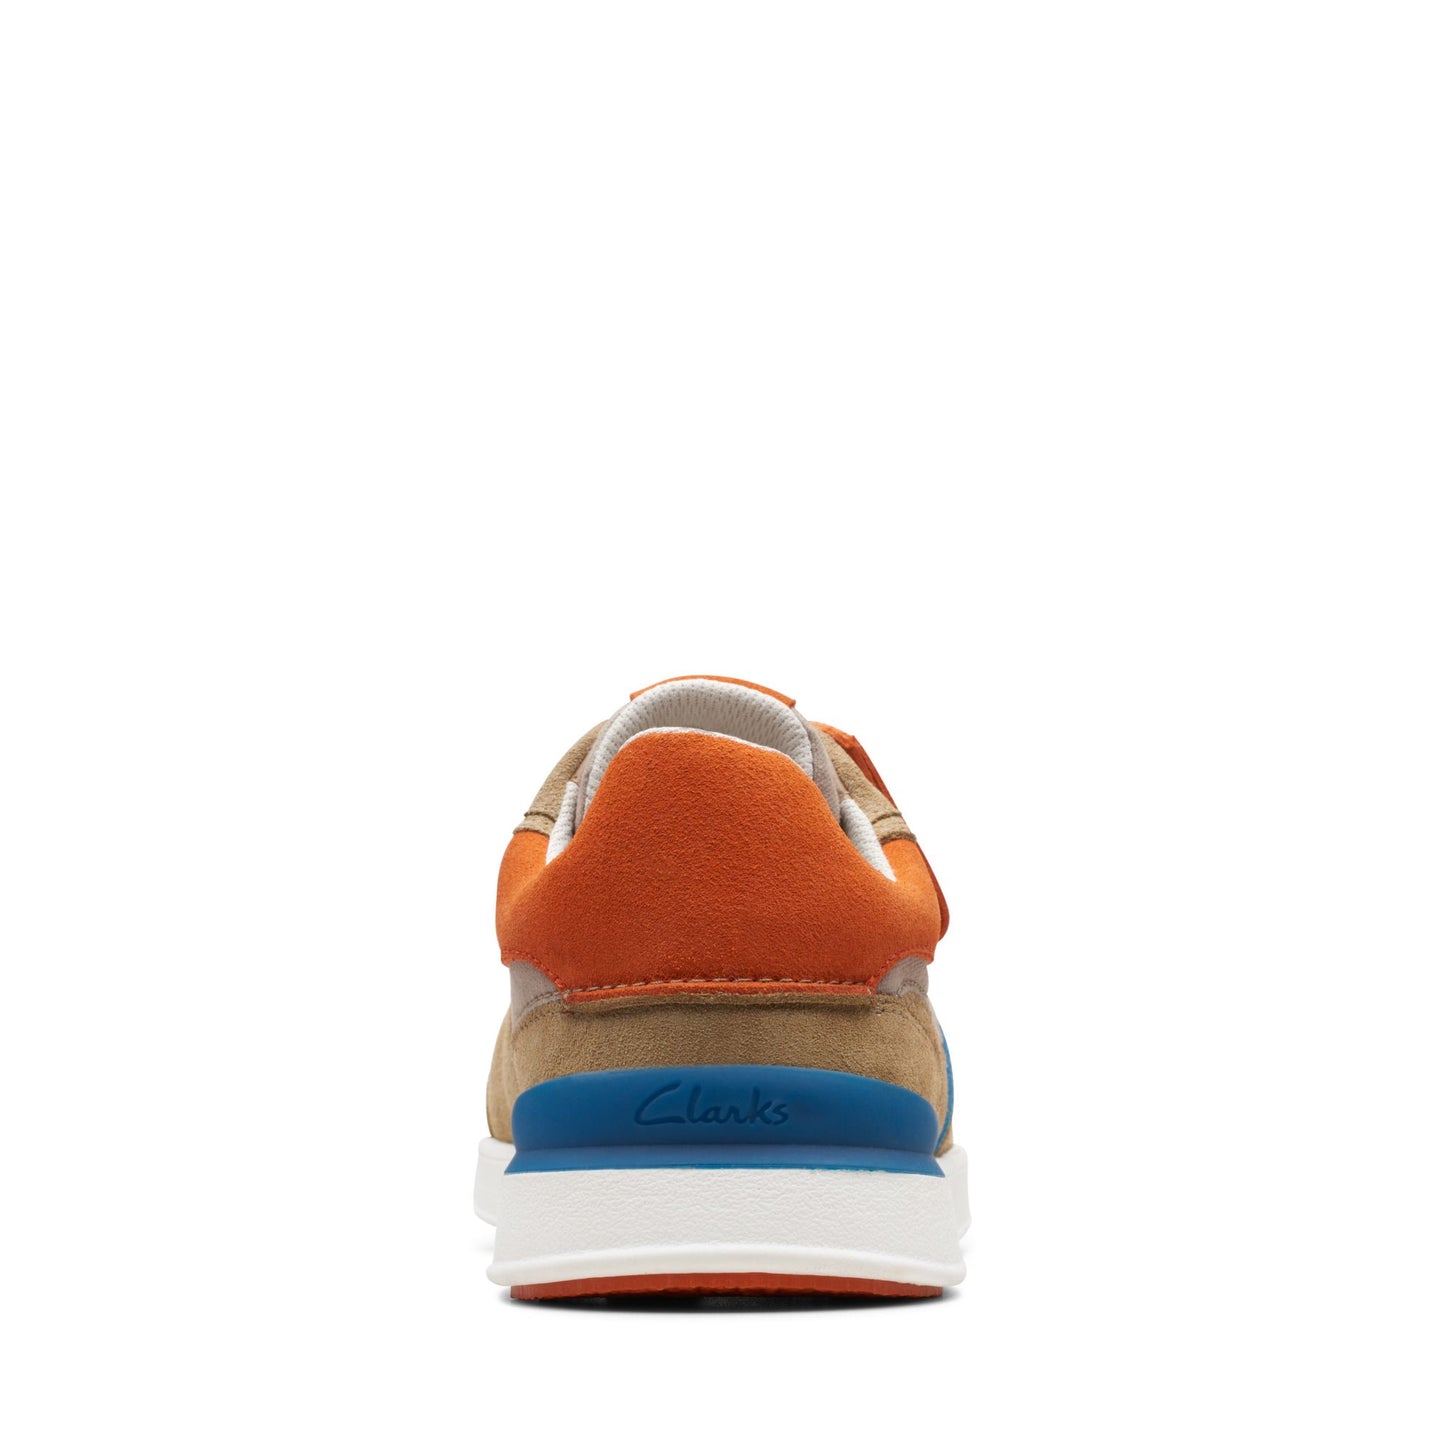 Sneakers De La Marca Clarks Para Hombre Modelo Racelite Tor Sand CombiEn Color Beige